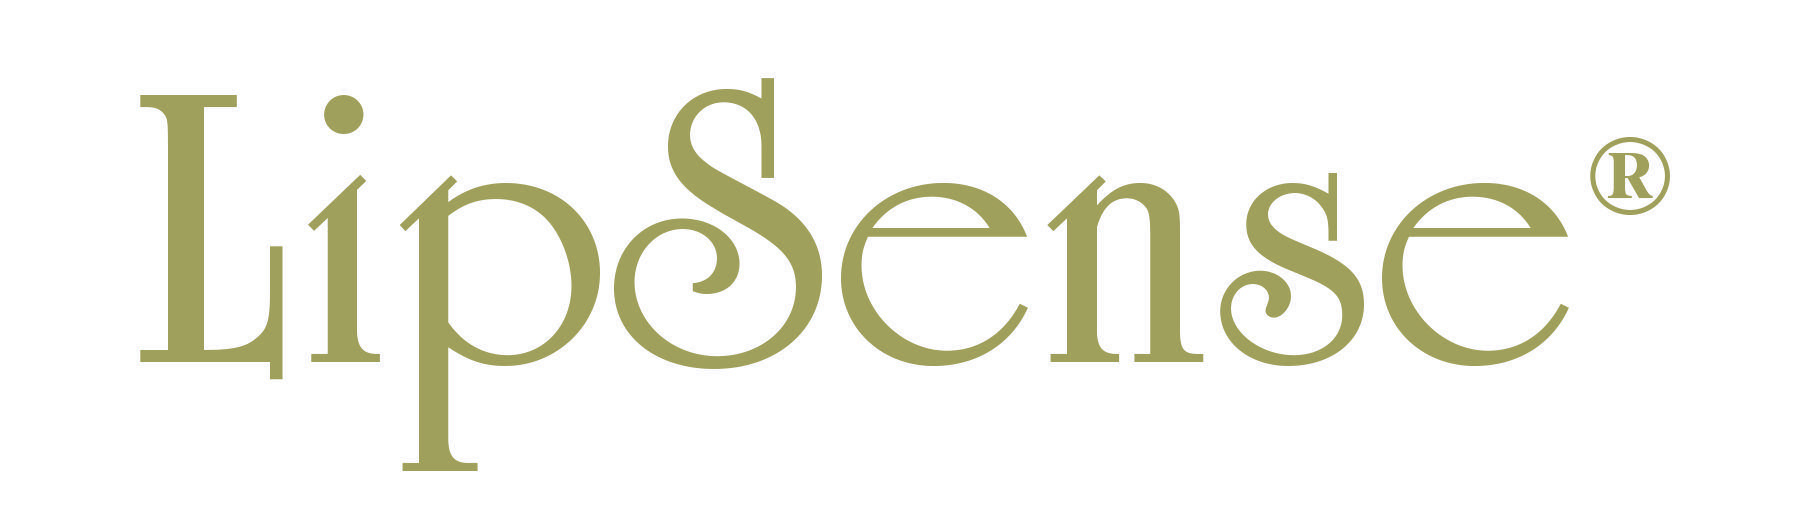 SeneGence Logo - Lipsense Logos